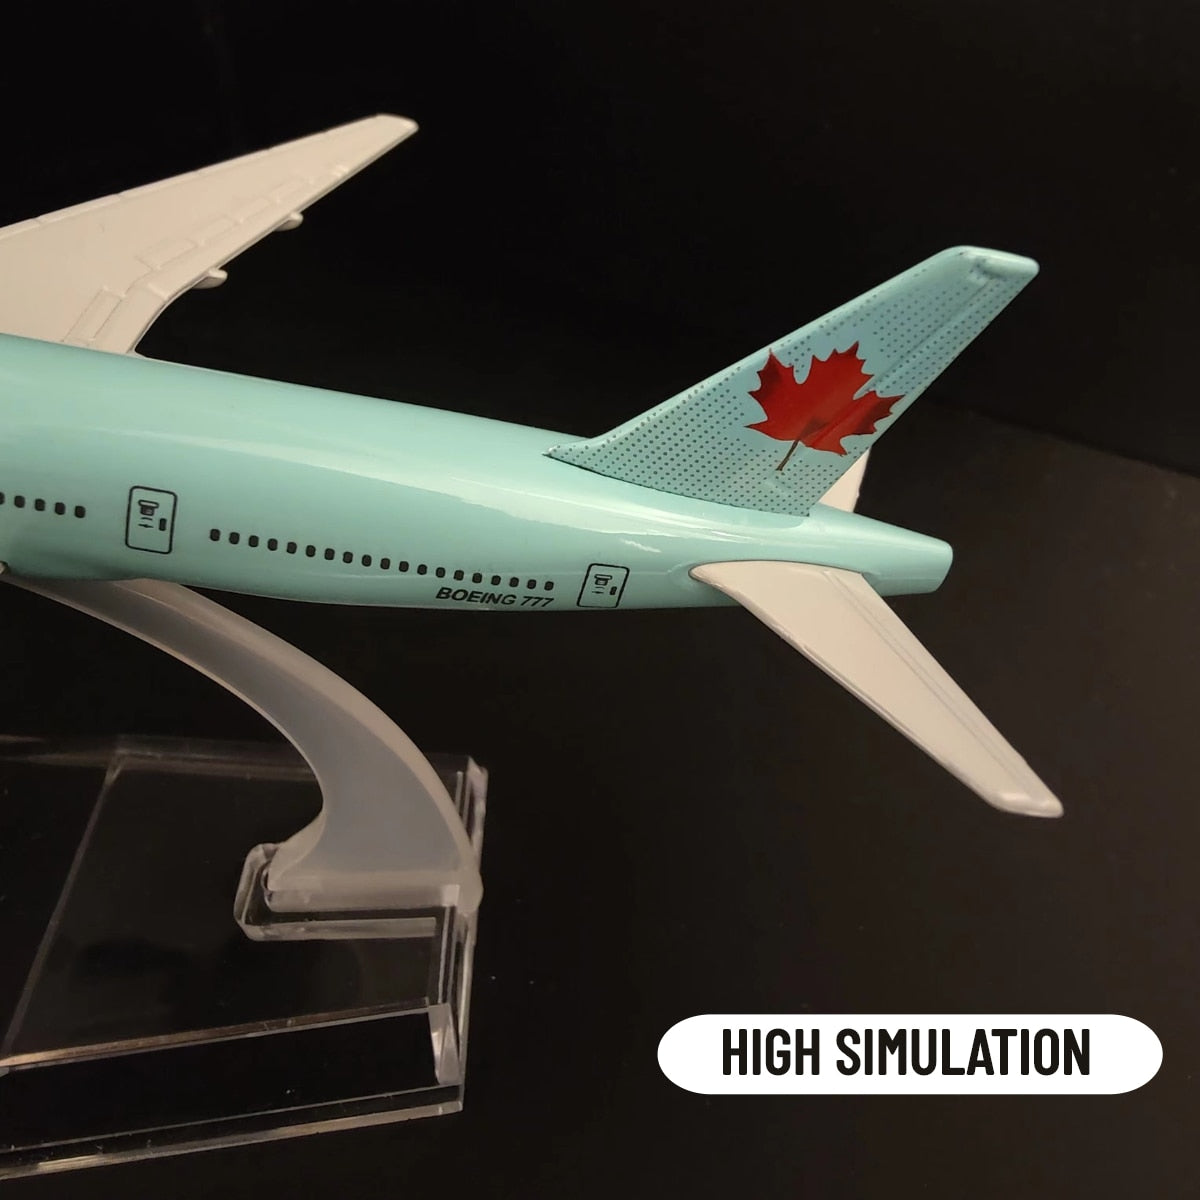 Scale 1:400 Metal Aircraft Replica Air Canada Boeing Model Diecast Aviation Collectible Plane Miniature Souvenir Ornament